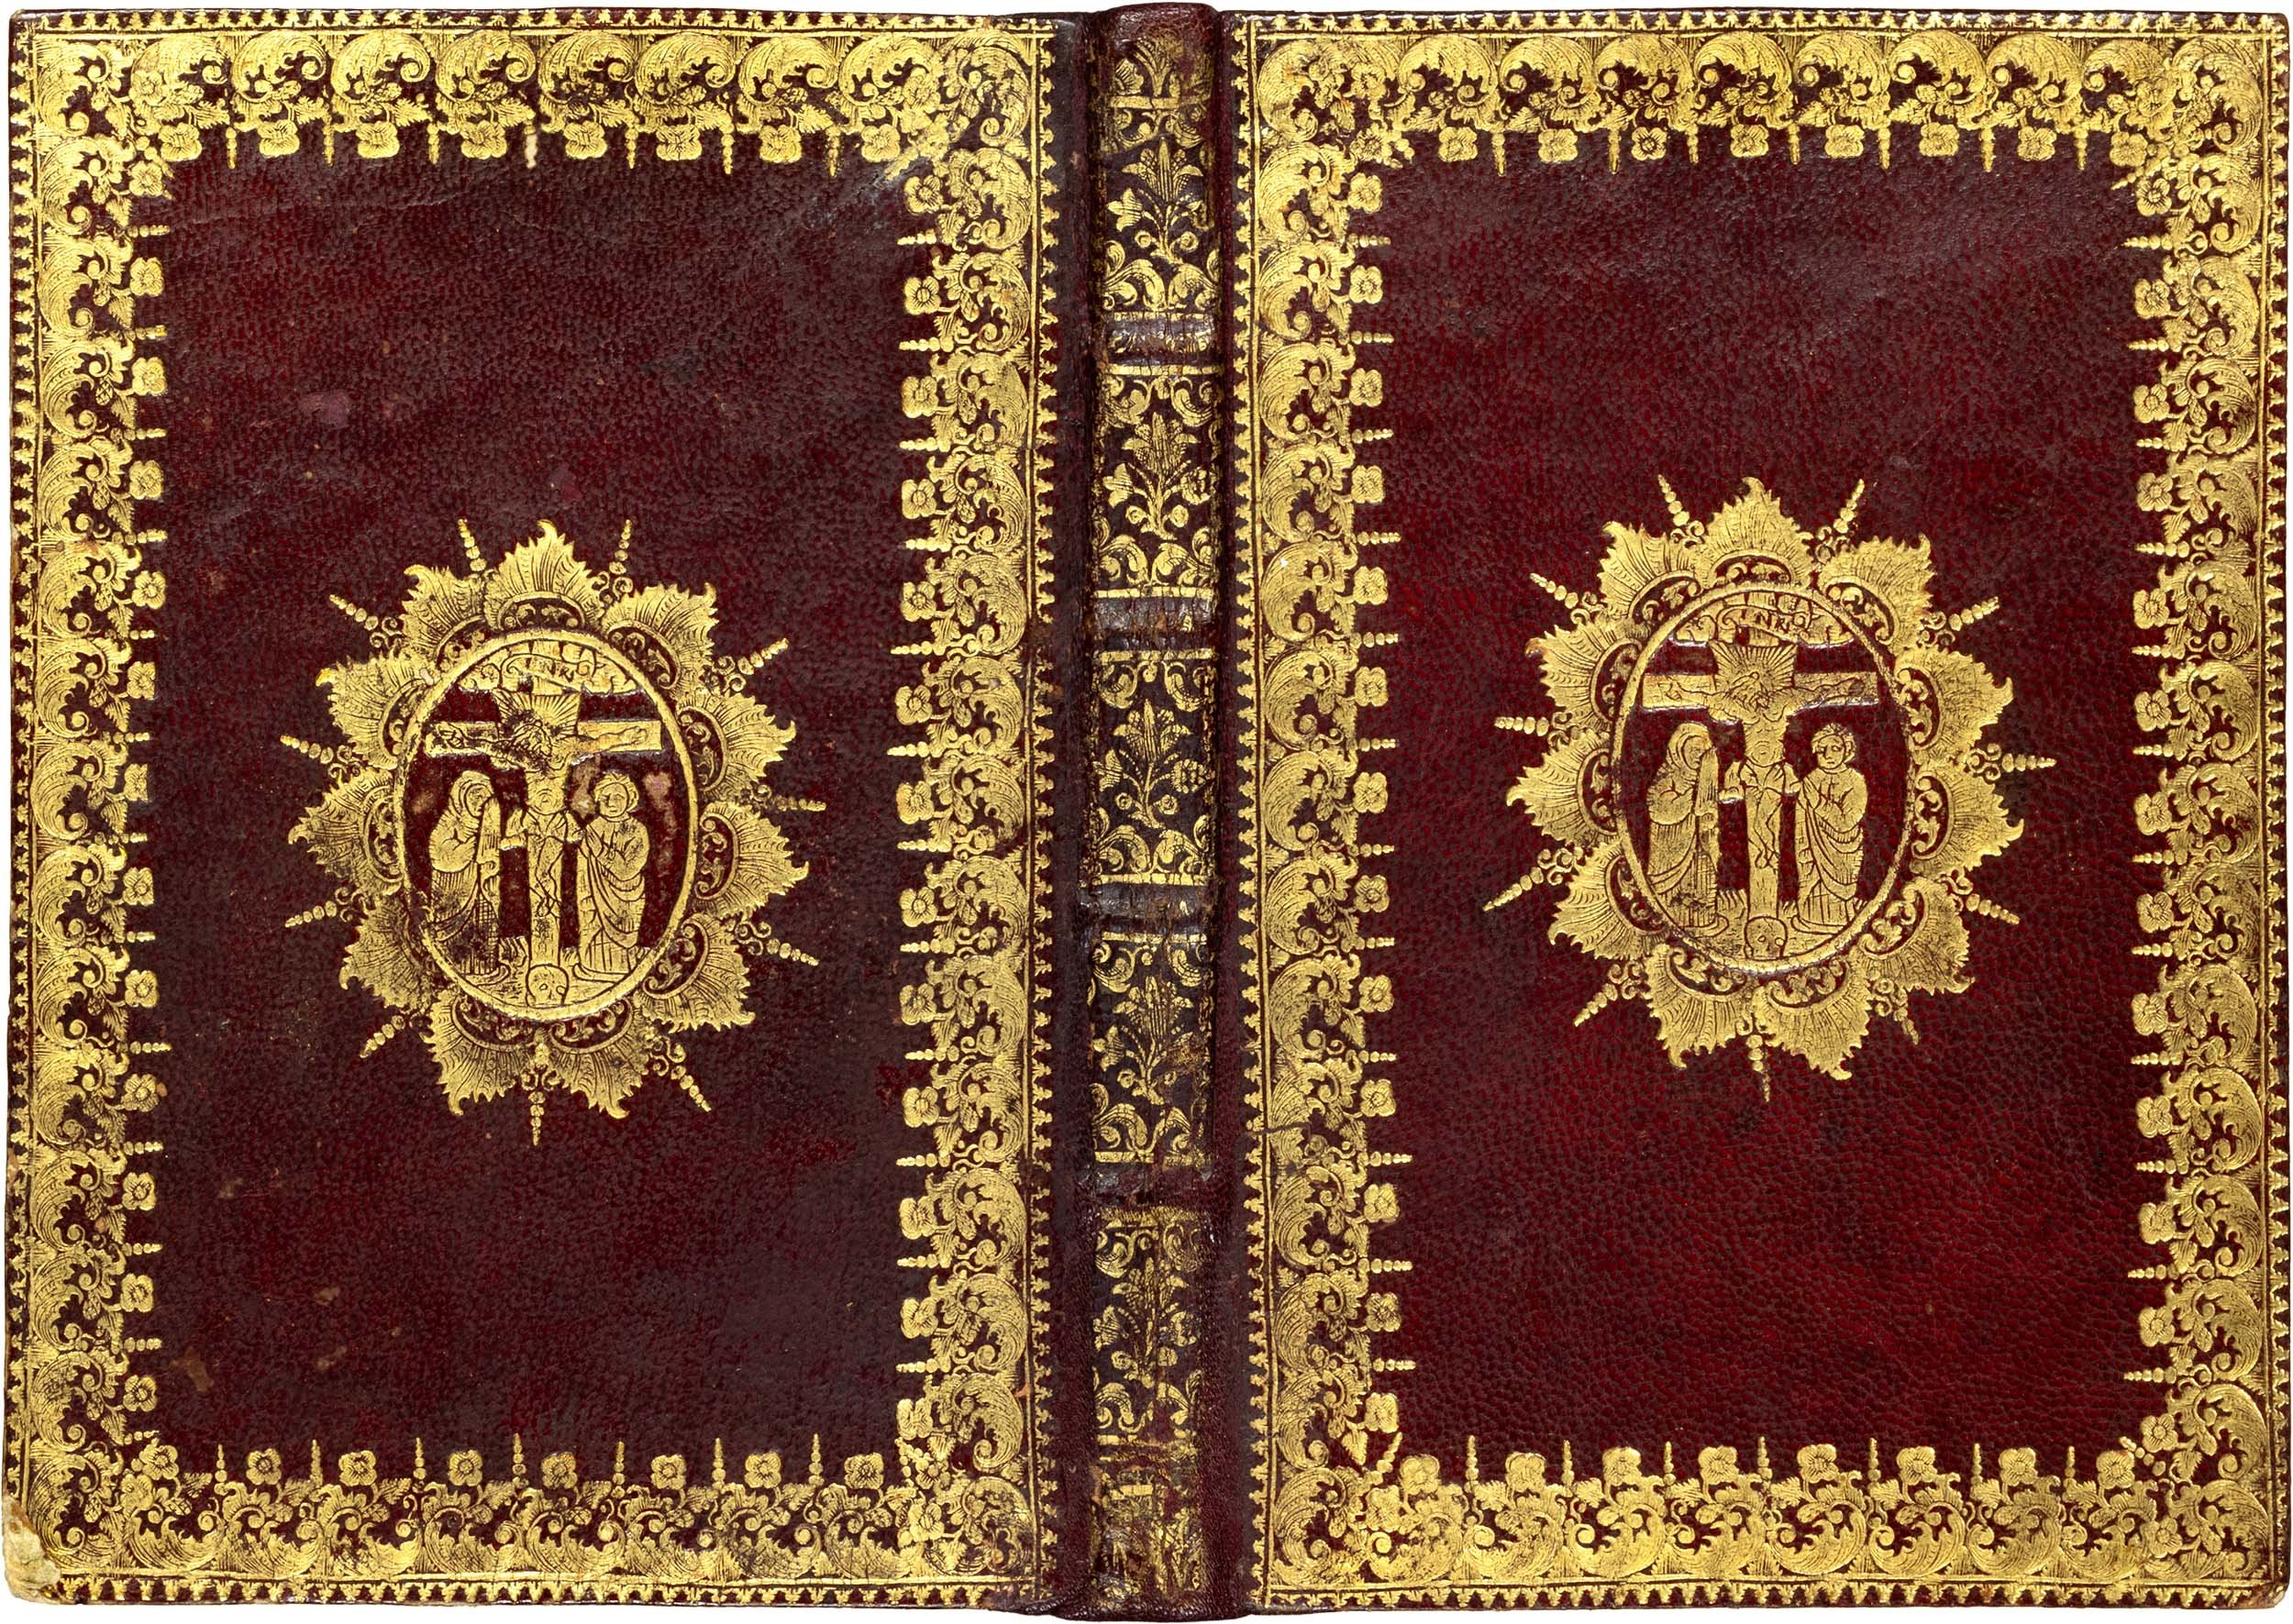 duerer-engraved-passion-kupferstich-passion-oertl-german-manuscript-vellum-1587-illuminated-1.jpg